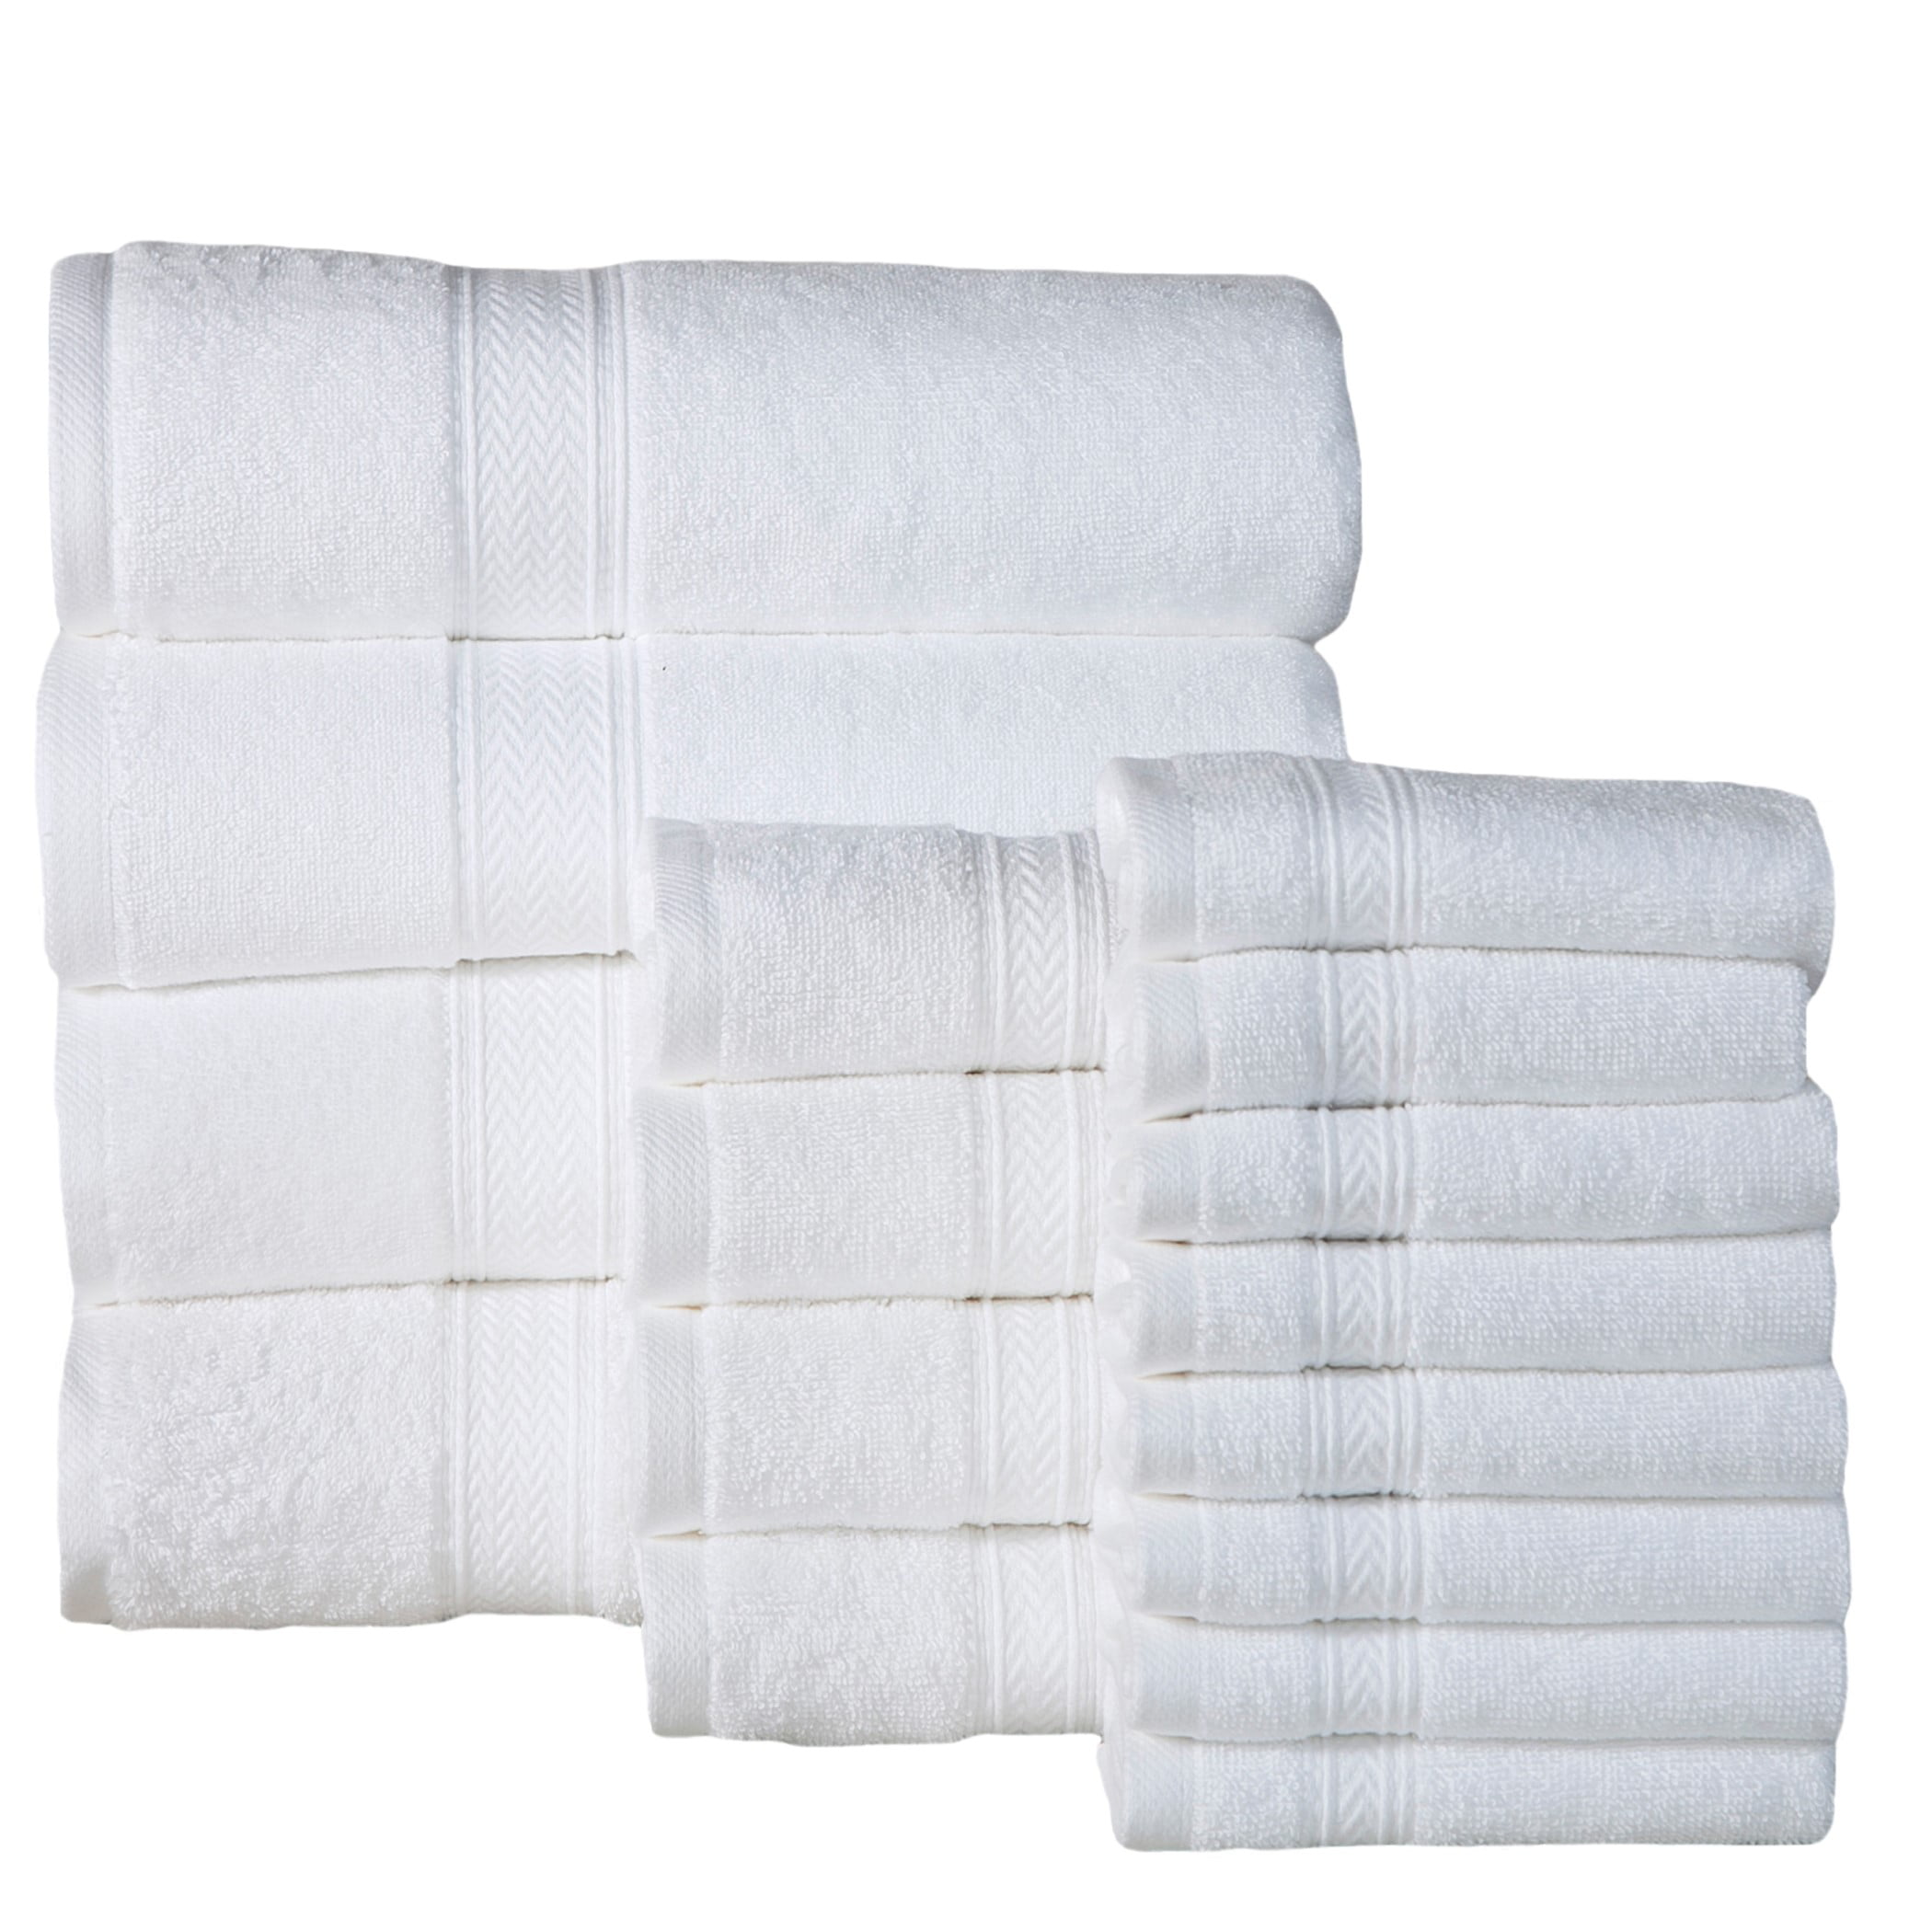 16PC Bath Towel Set (4 Bath, 4 Hand & 8 Wash) - White, Addy Home 